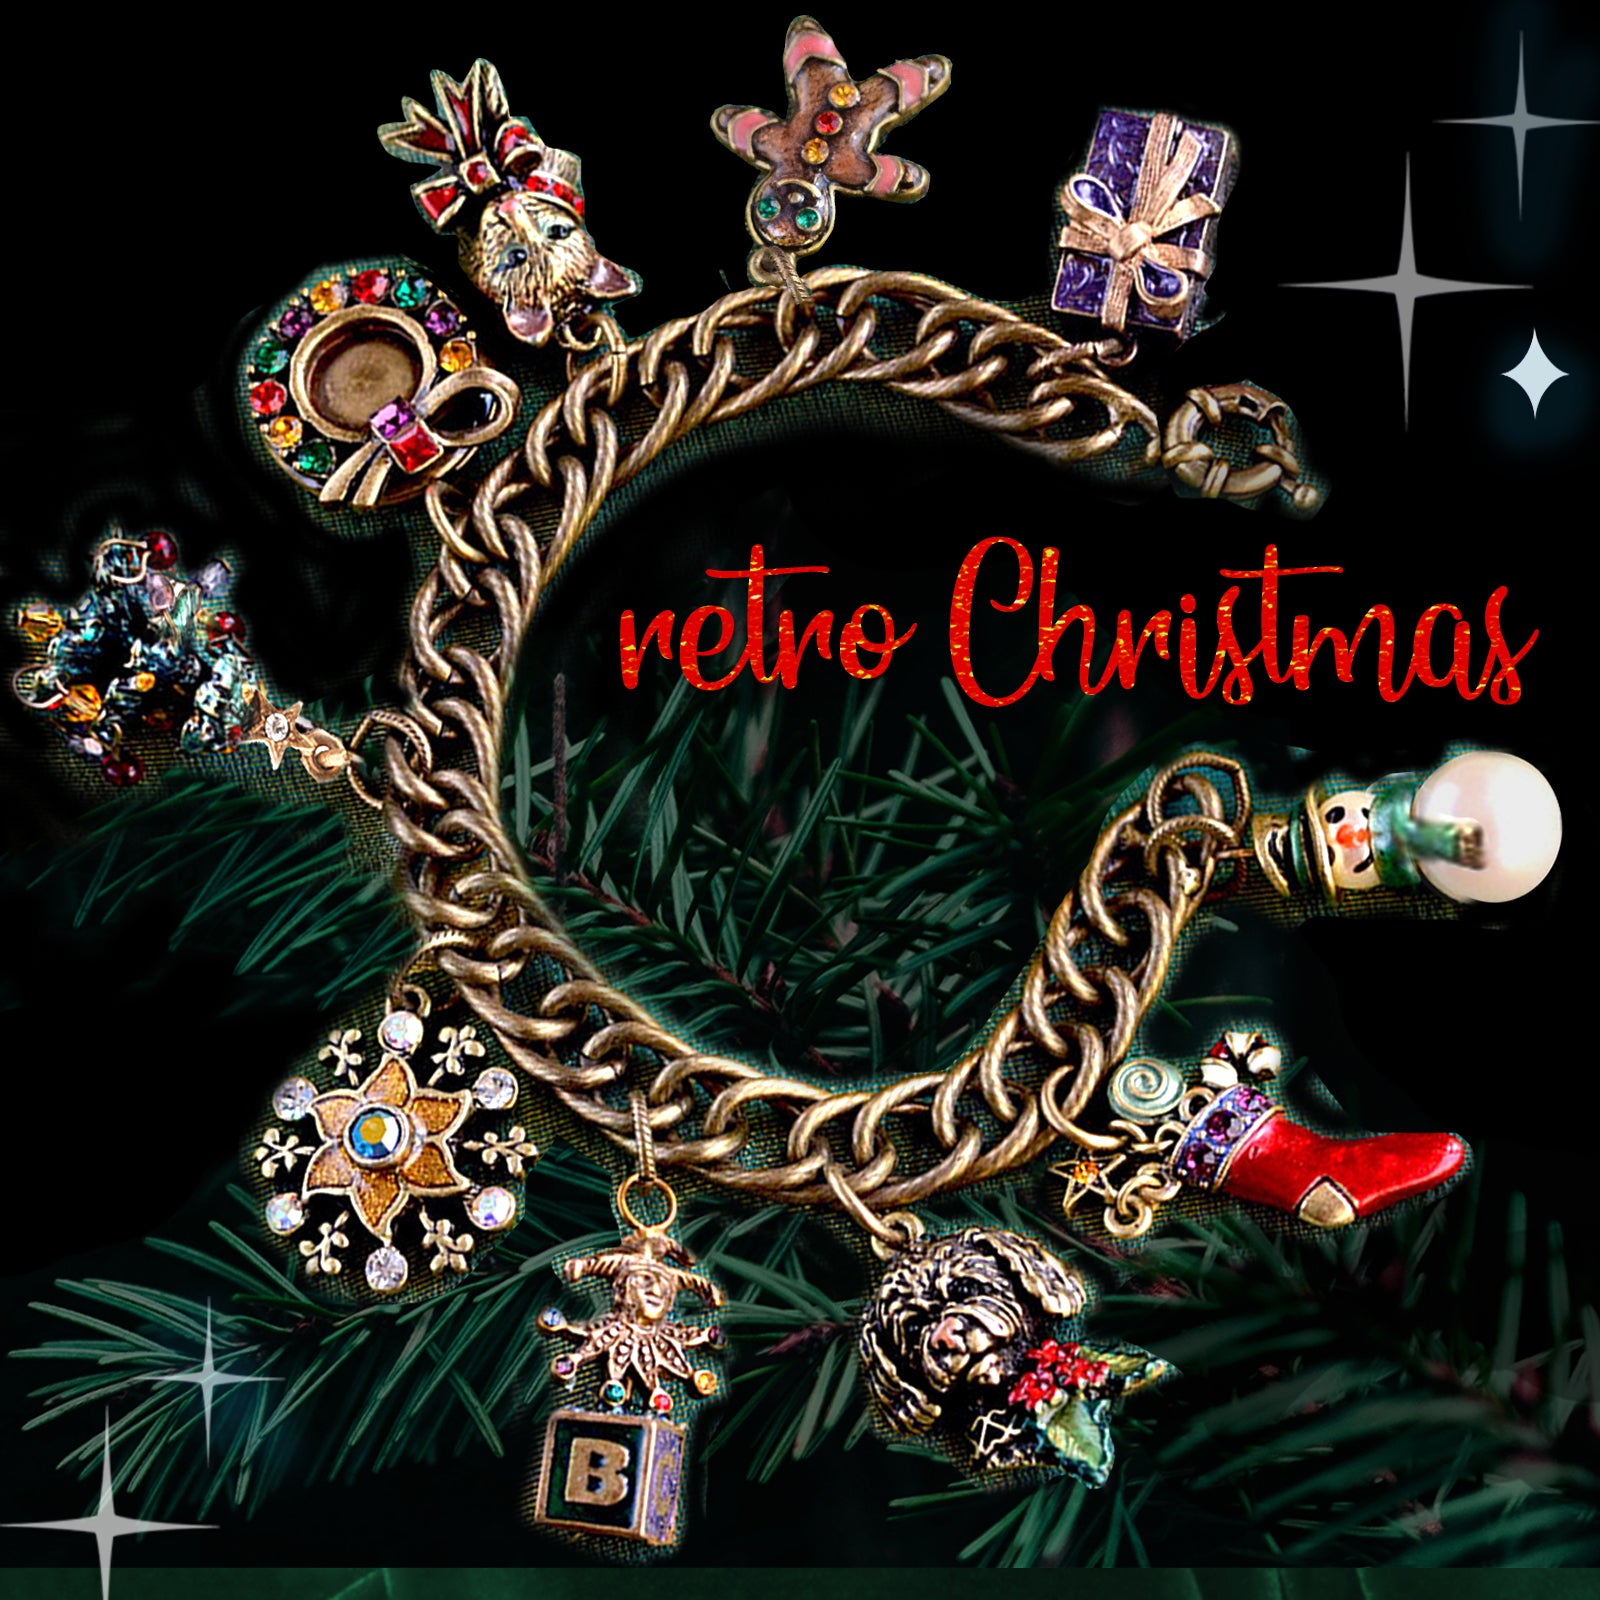 Christmas Carol Charm Bracelet - Charm Bracelets